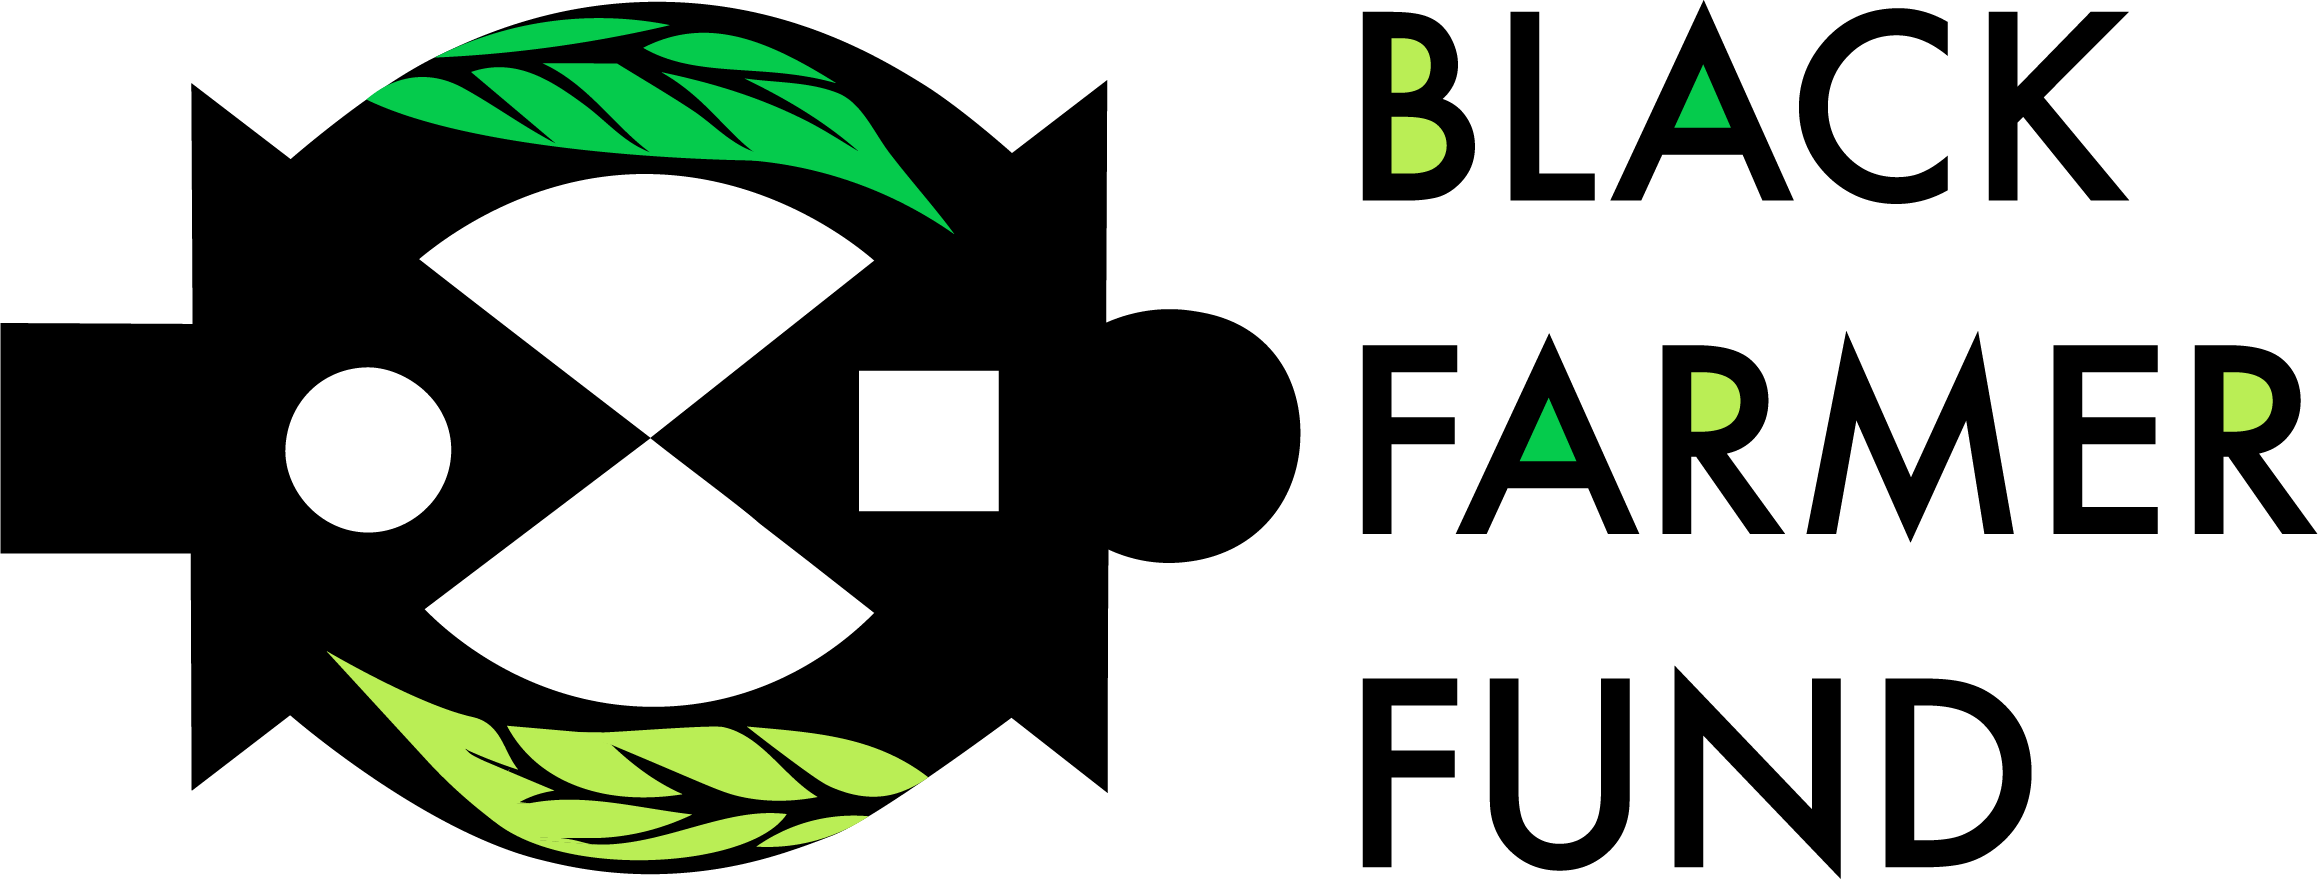 Black+Farmer+Fund+Logo+Colour.png